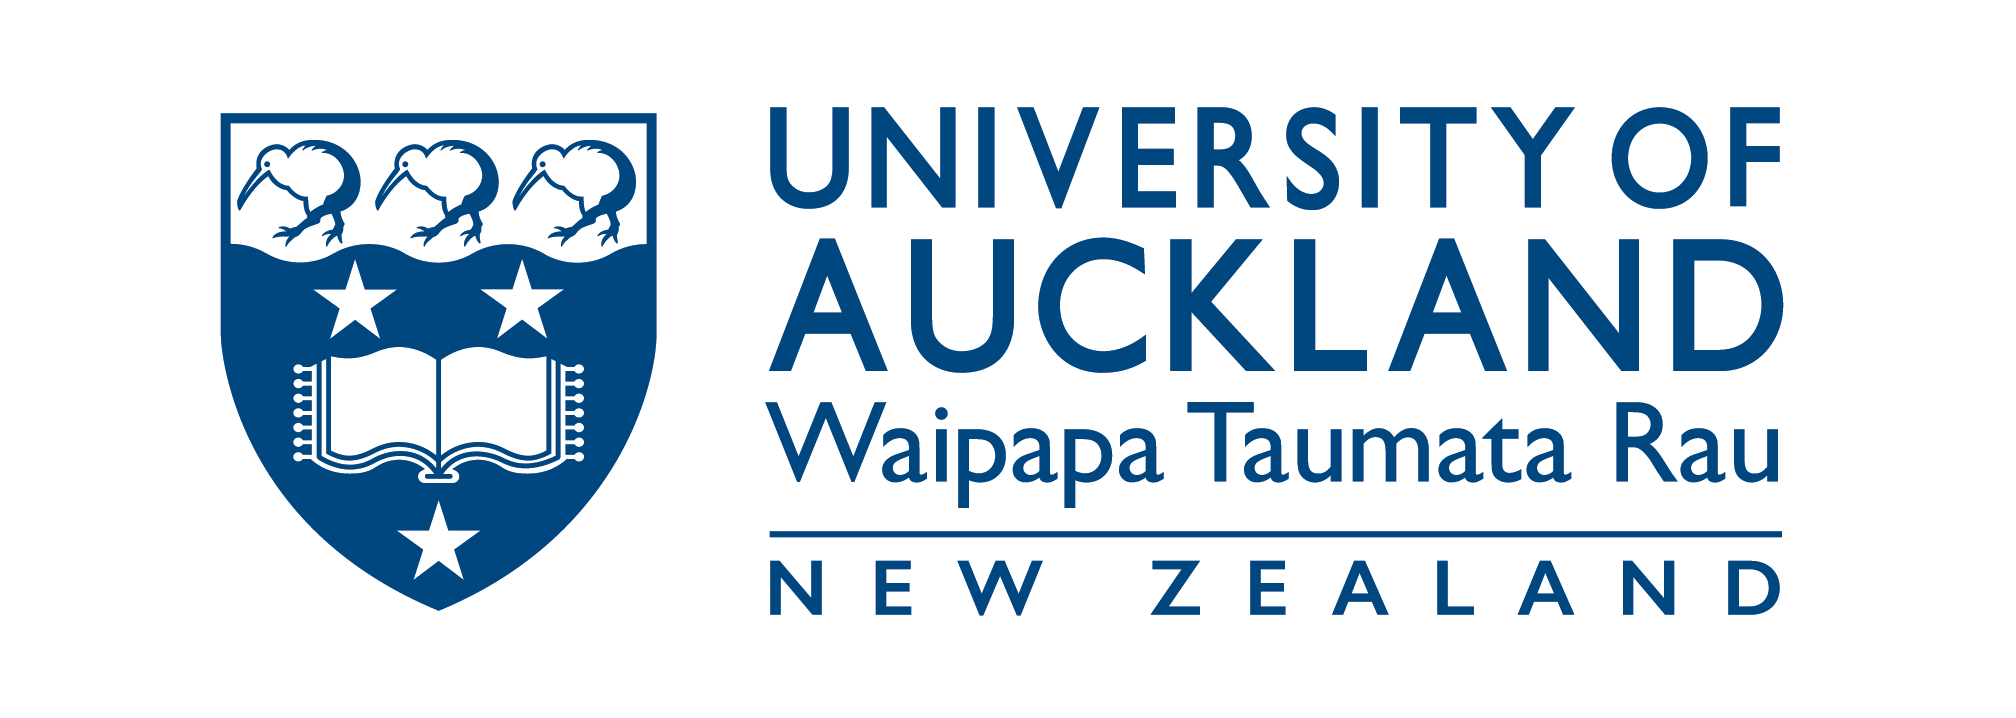 Waipapa Taumata Rau, University of Auckland